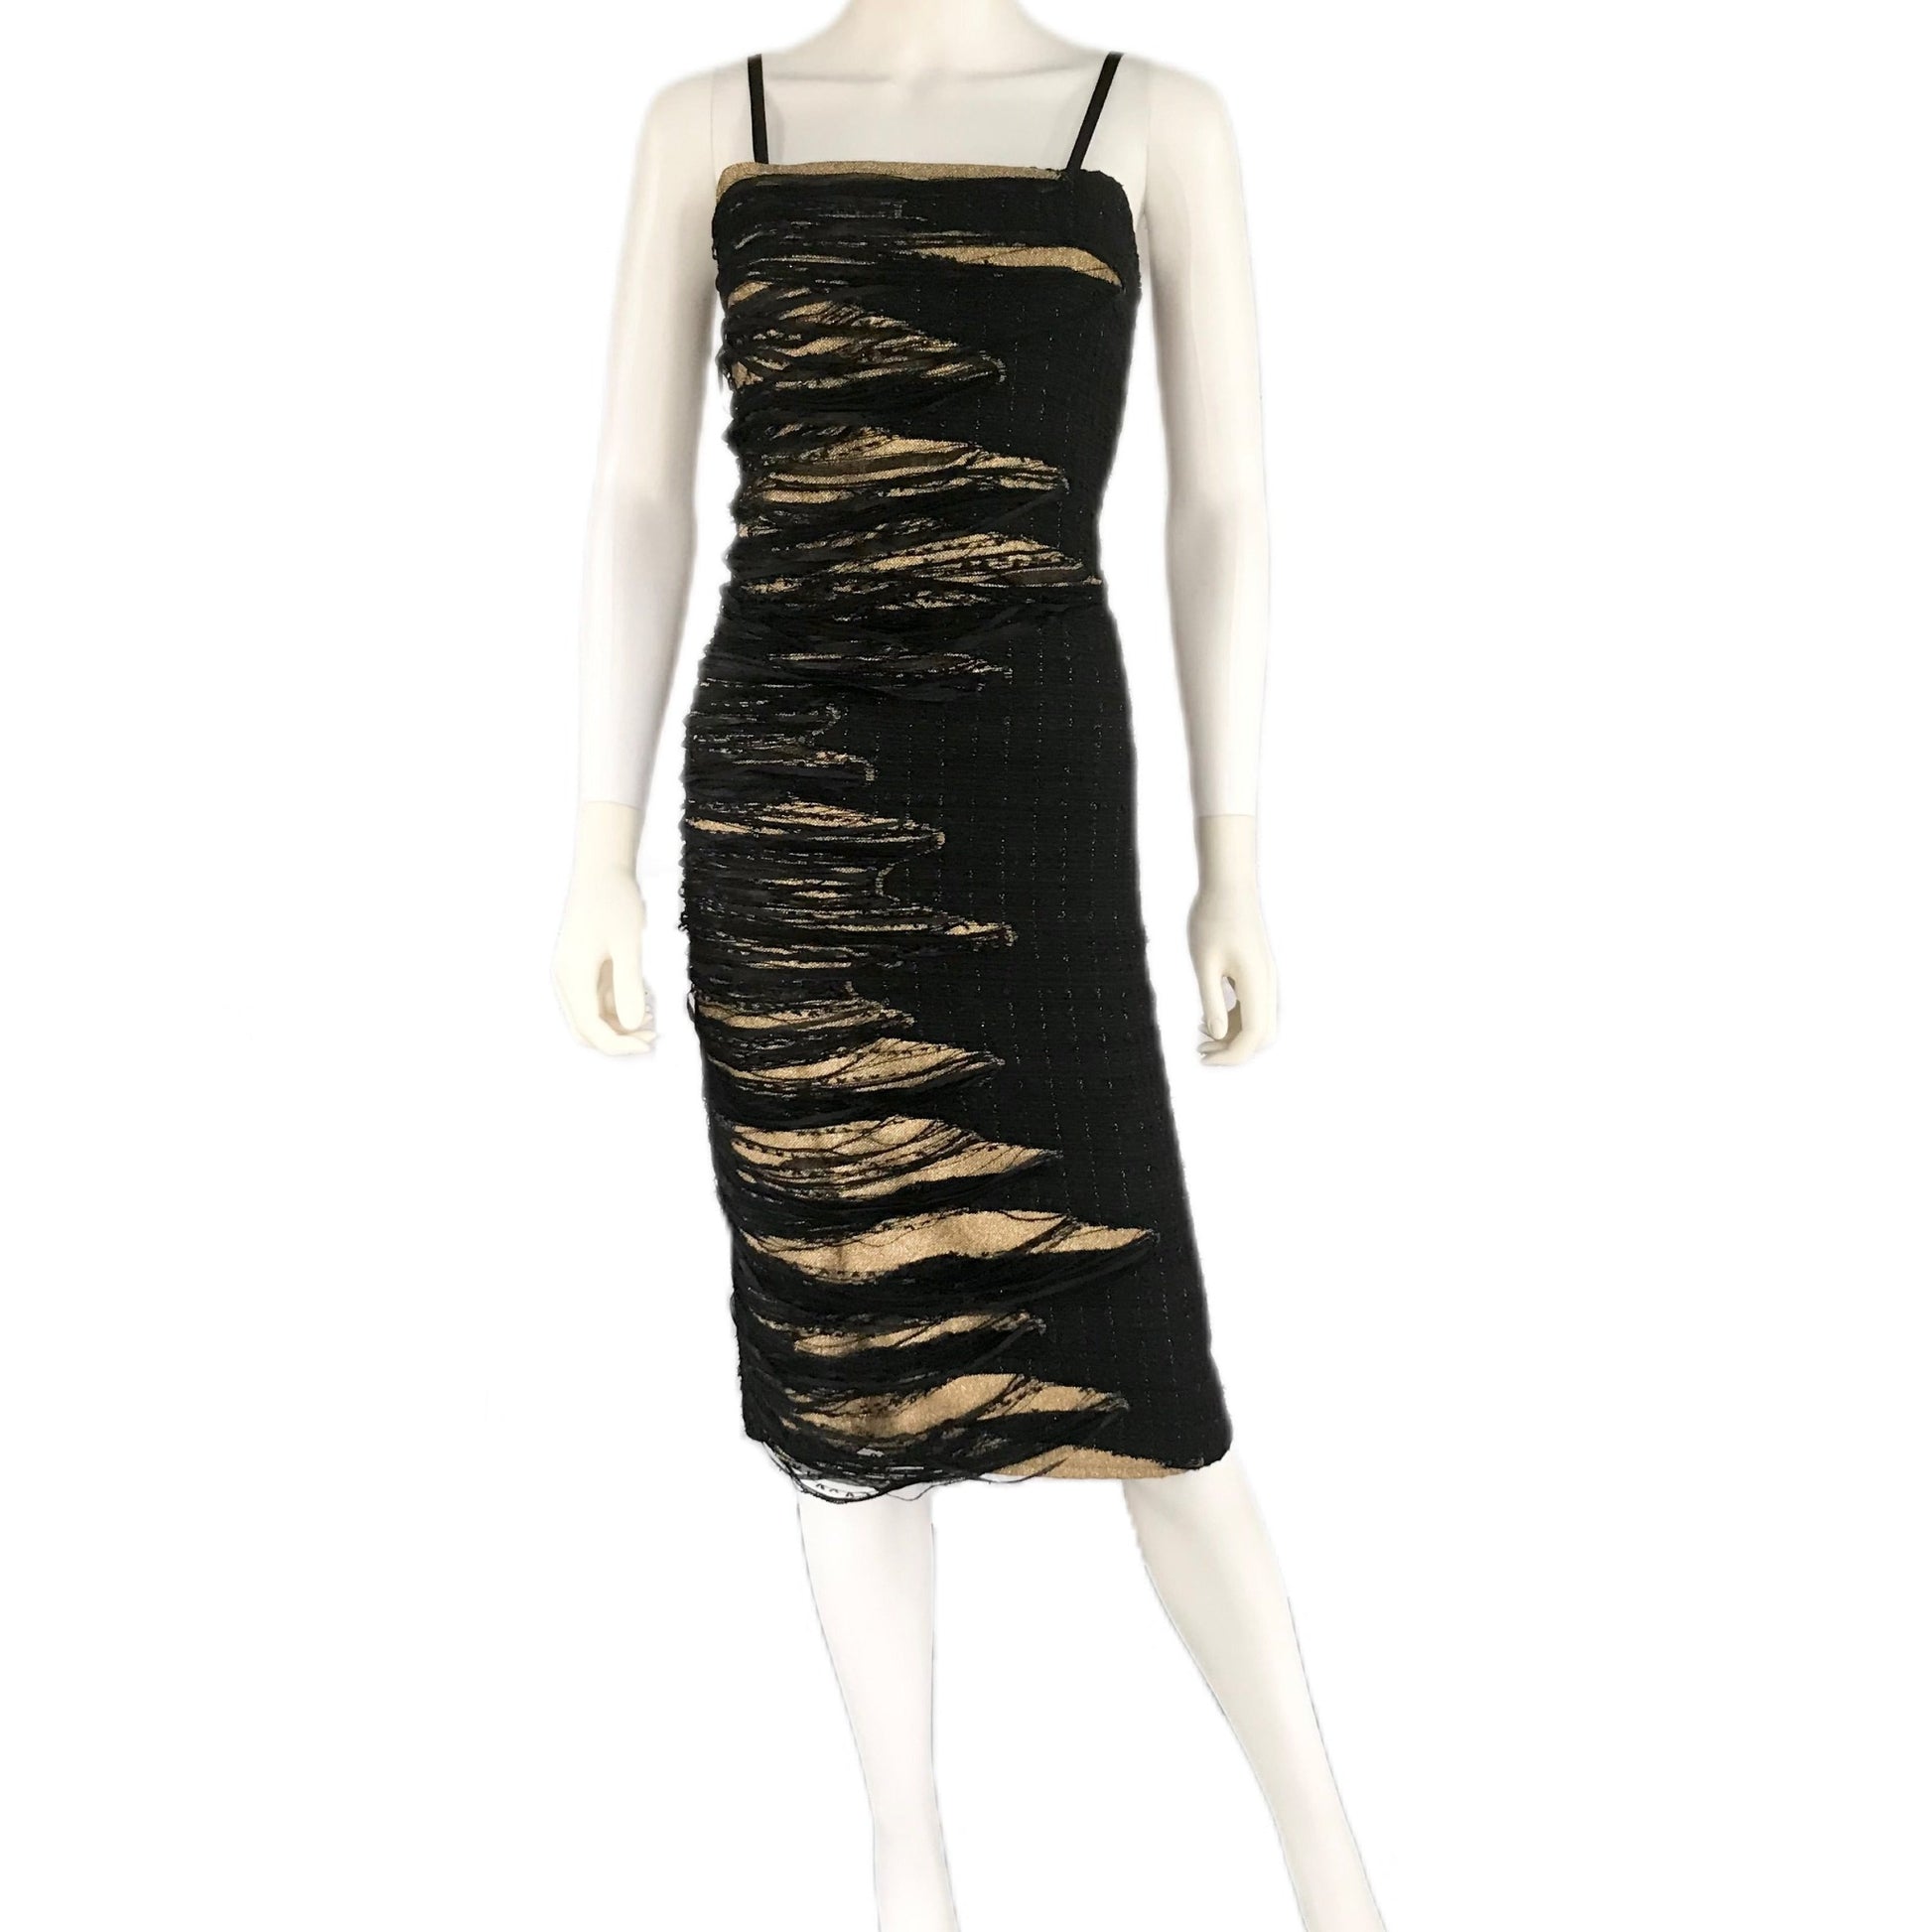 Gold Drip Women's Cocktail Dress - Size 0/2